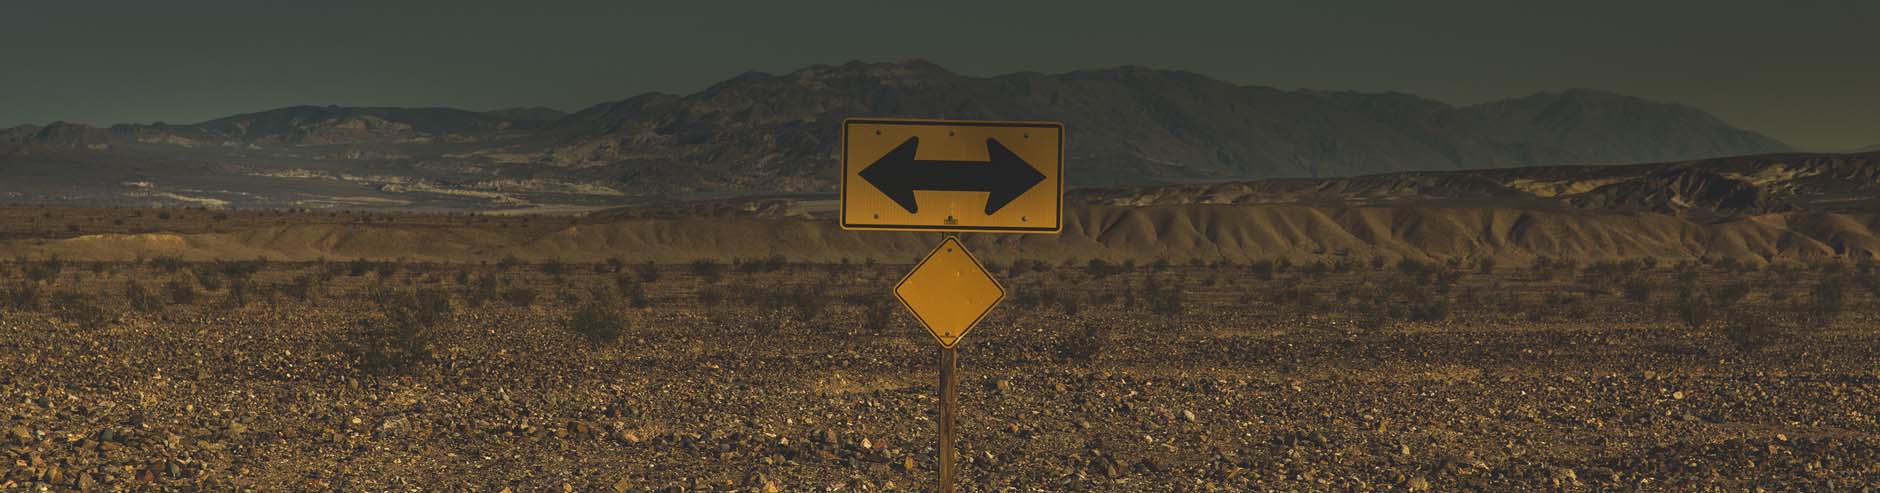 double arrow road sign